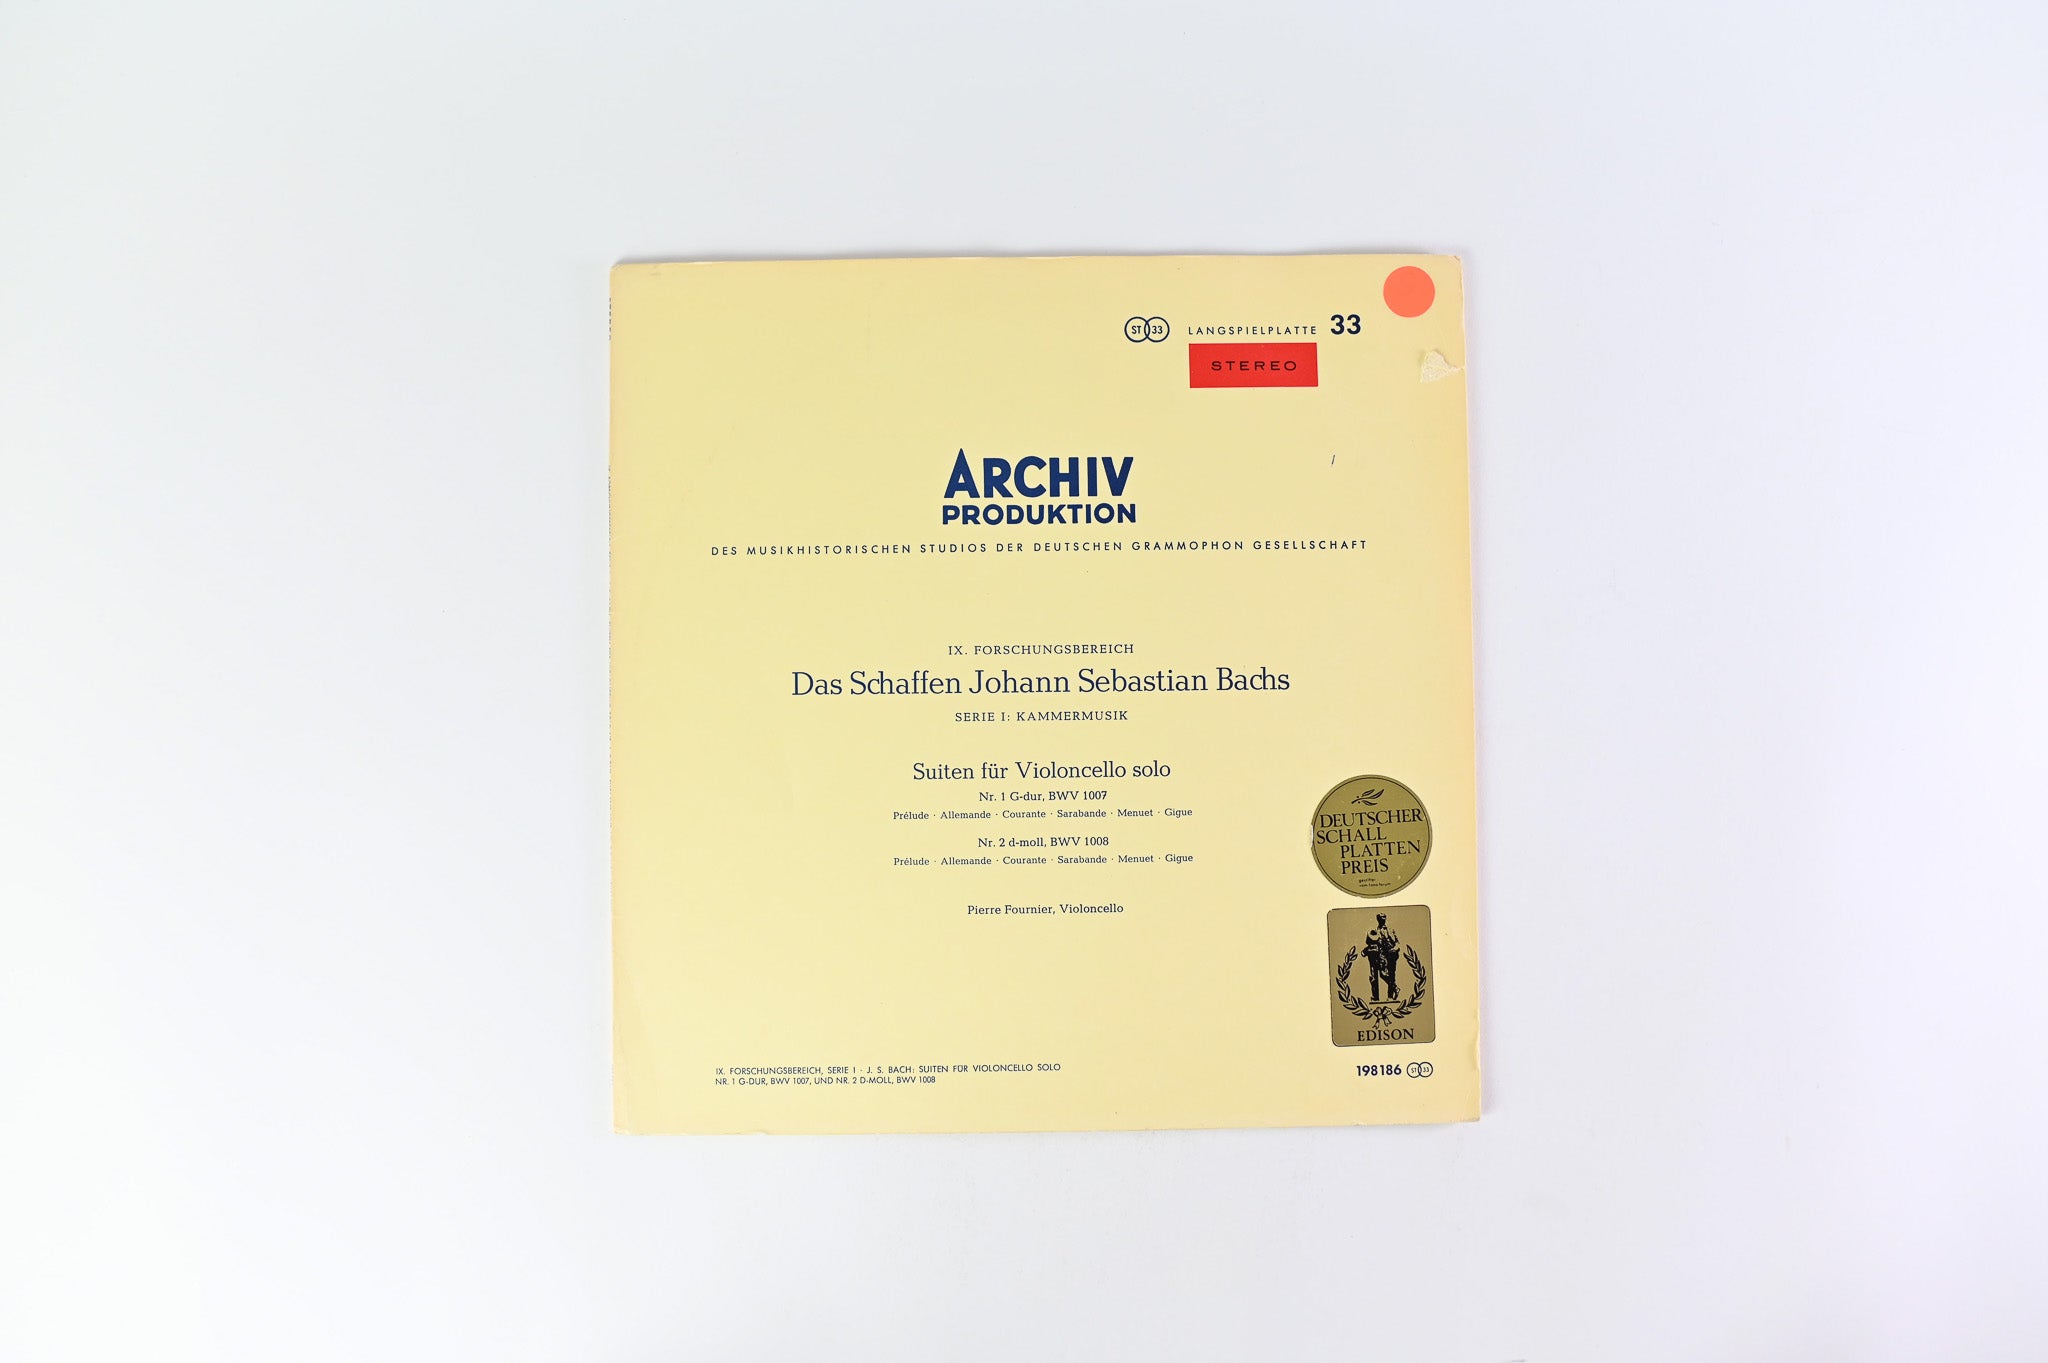 Johann Sebastian Bach – Pierre Fournier – Suiten Für Violoncello Solo N°1 & 2 on Archiv Produktion